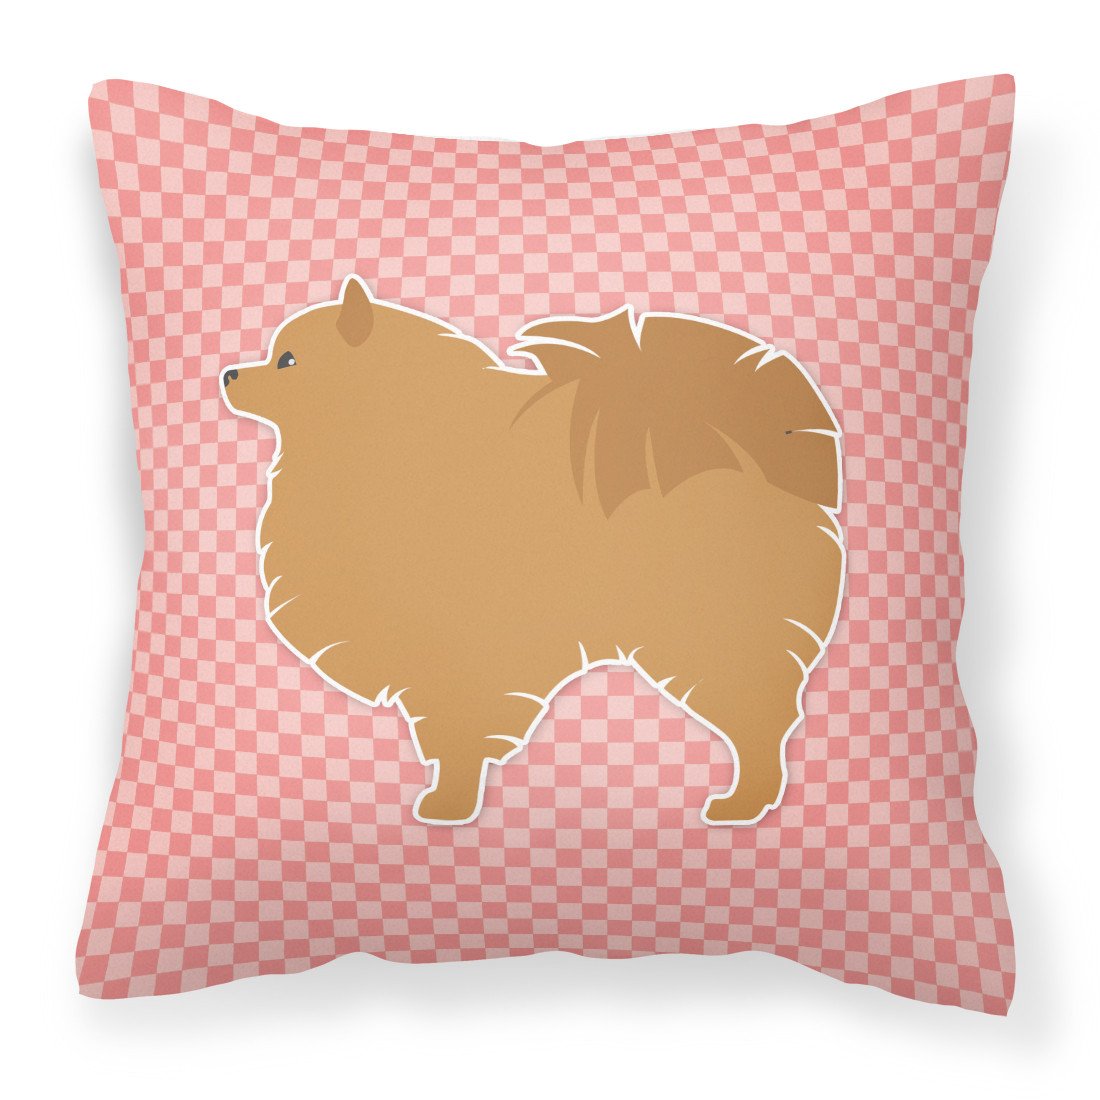 Pomeranian Checkerboard Pink Fabric Decorative Pillow BB3642PW1818 by Caroline's Treasures